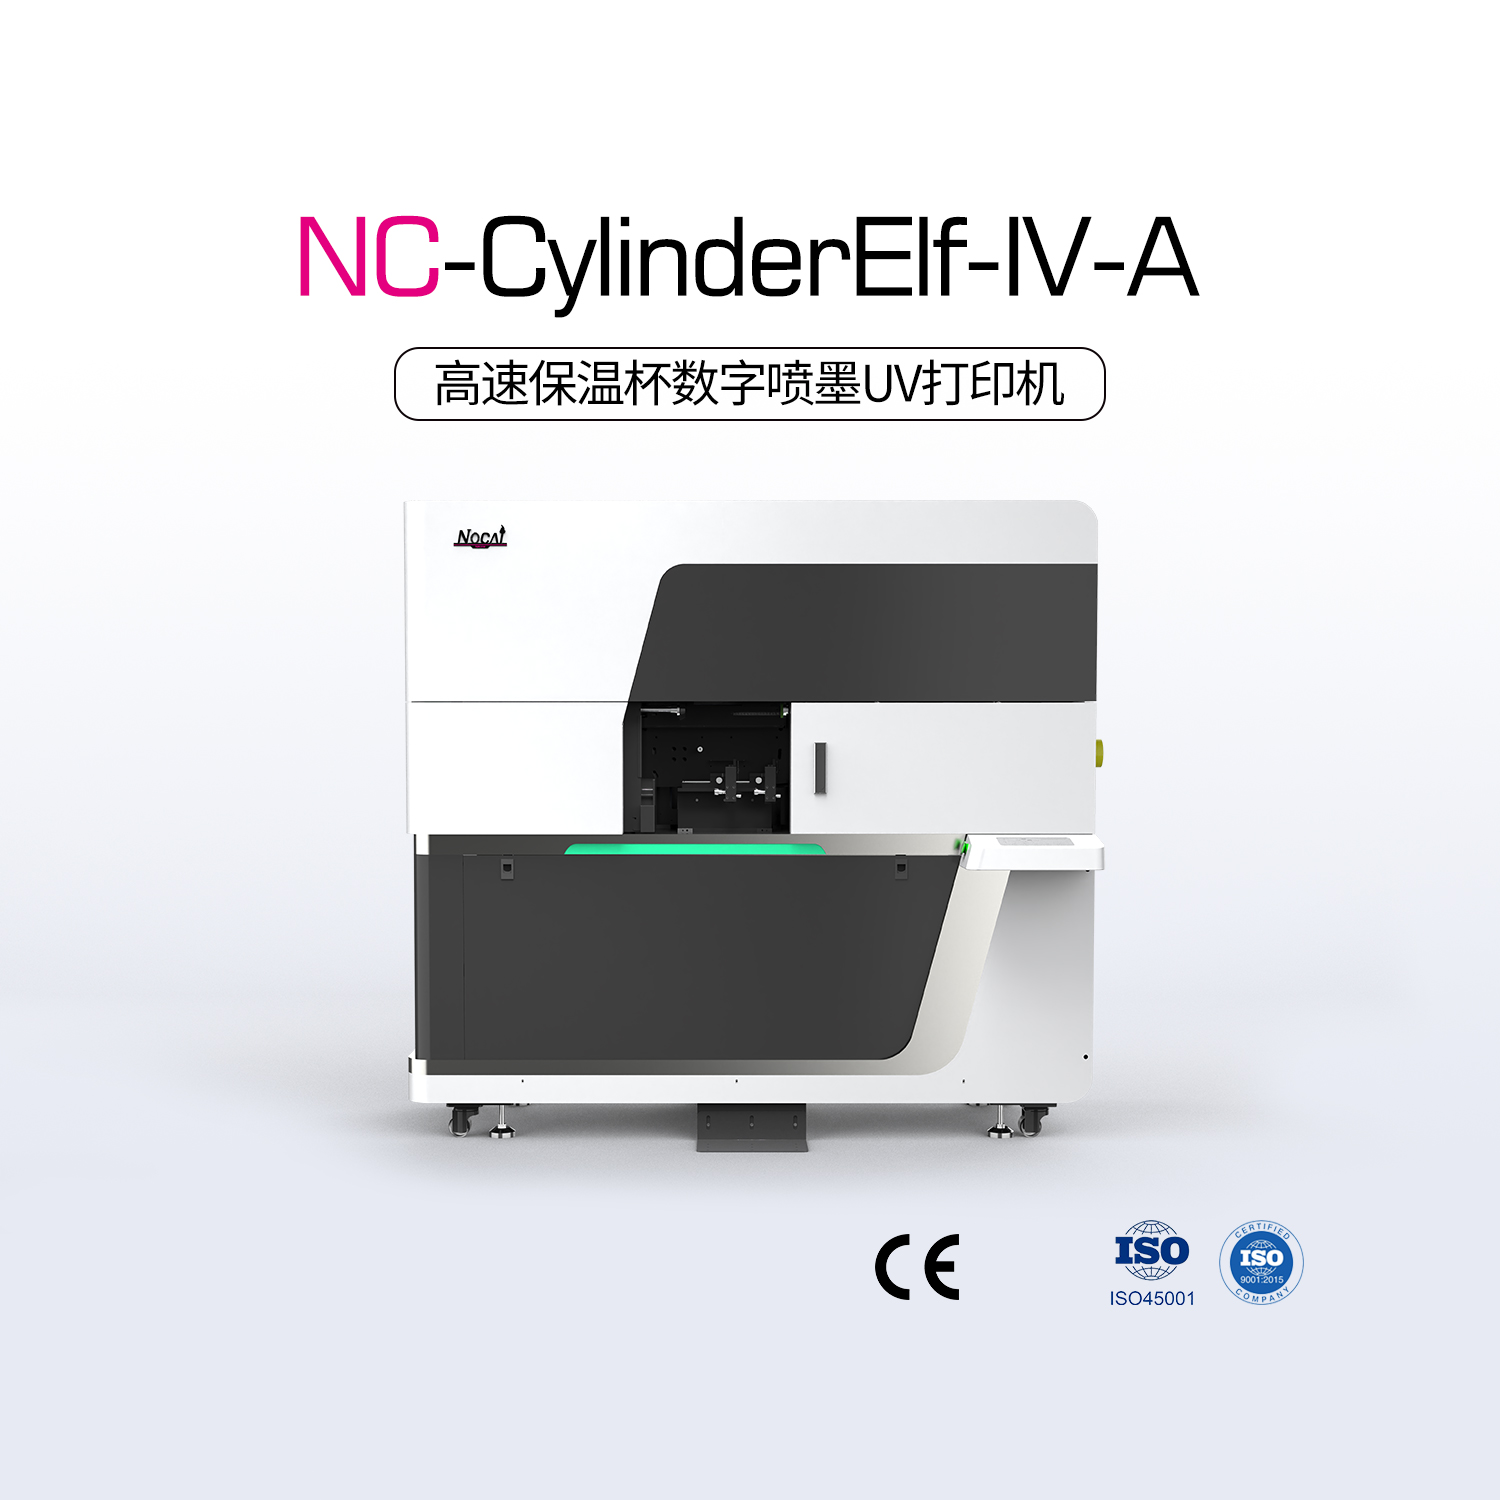 NC-CylinderElf-IV-A